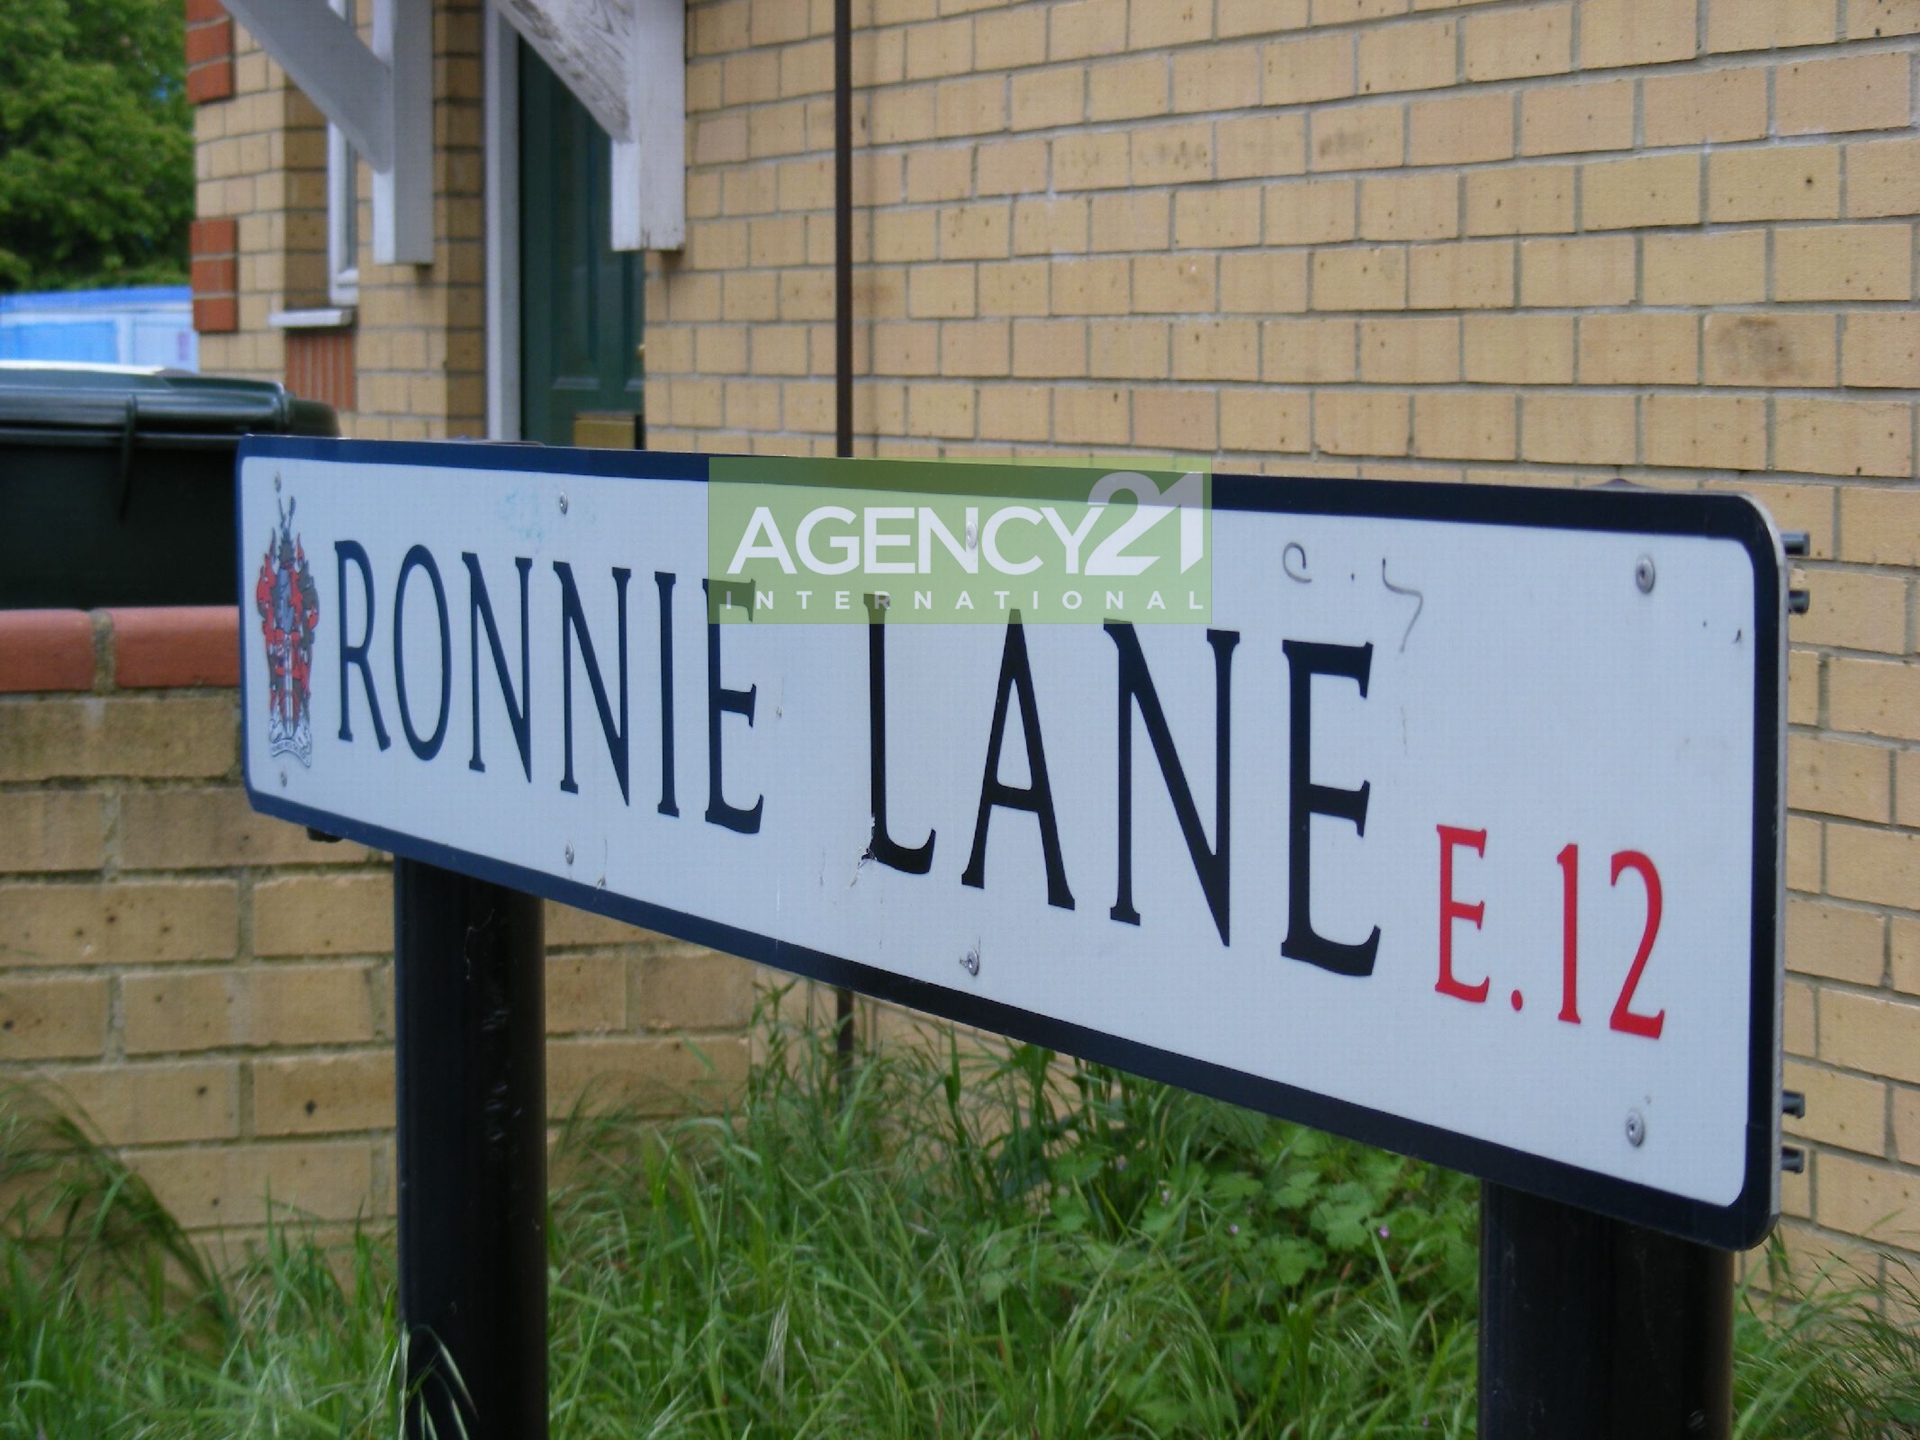 Ronnie Lane Manor Park London E12